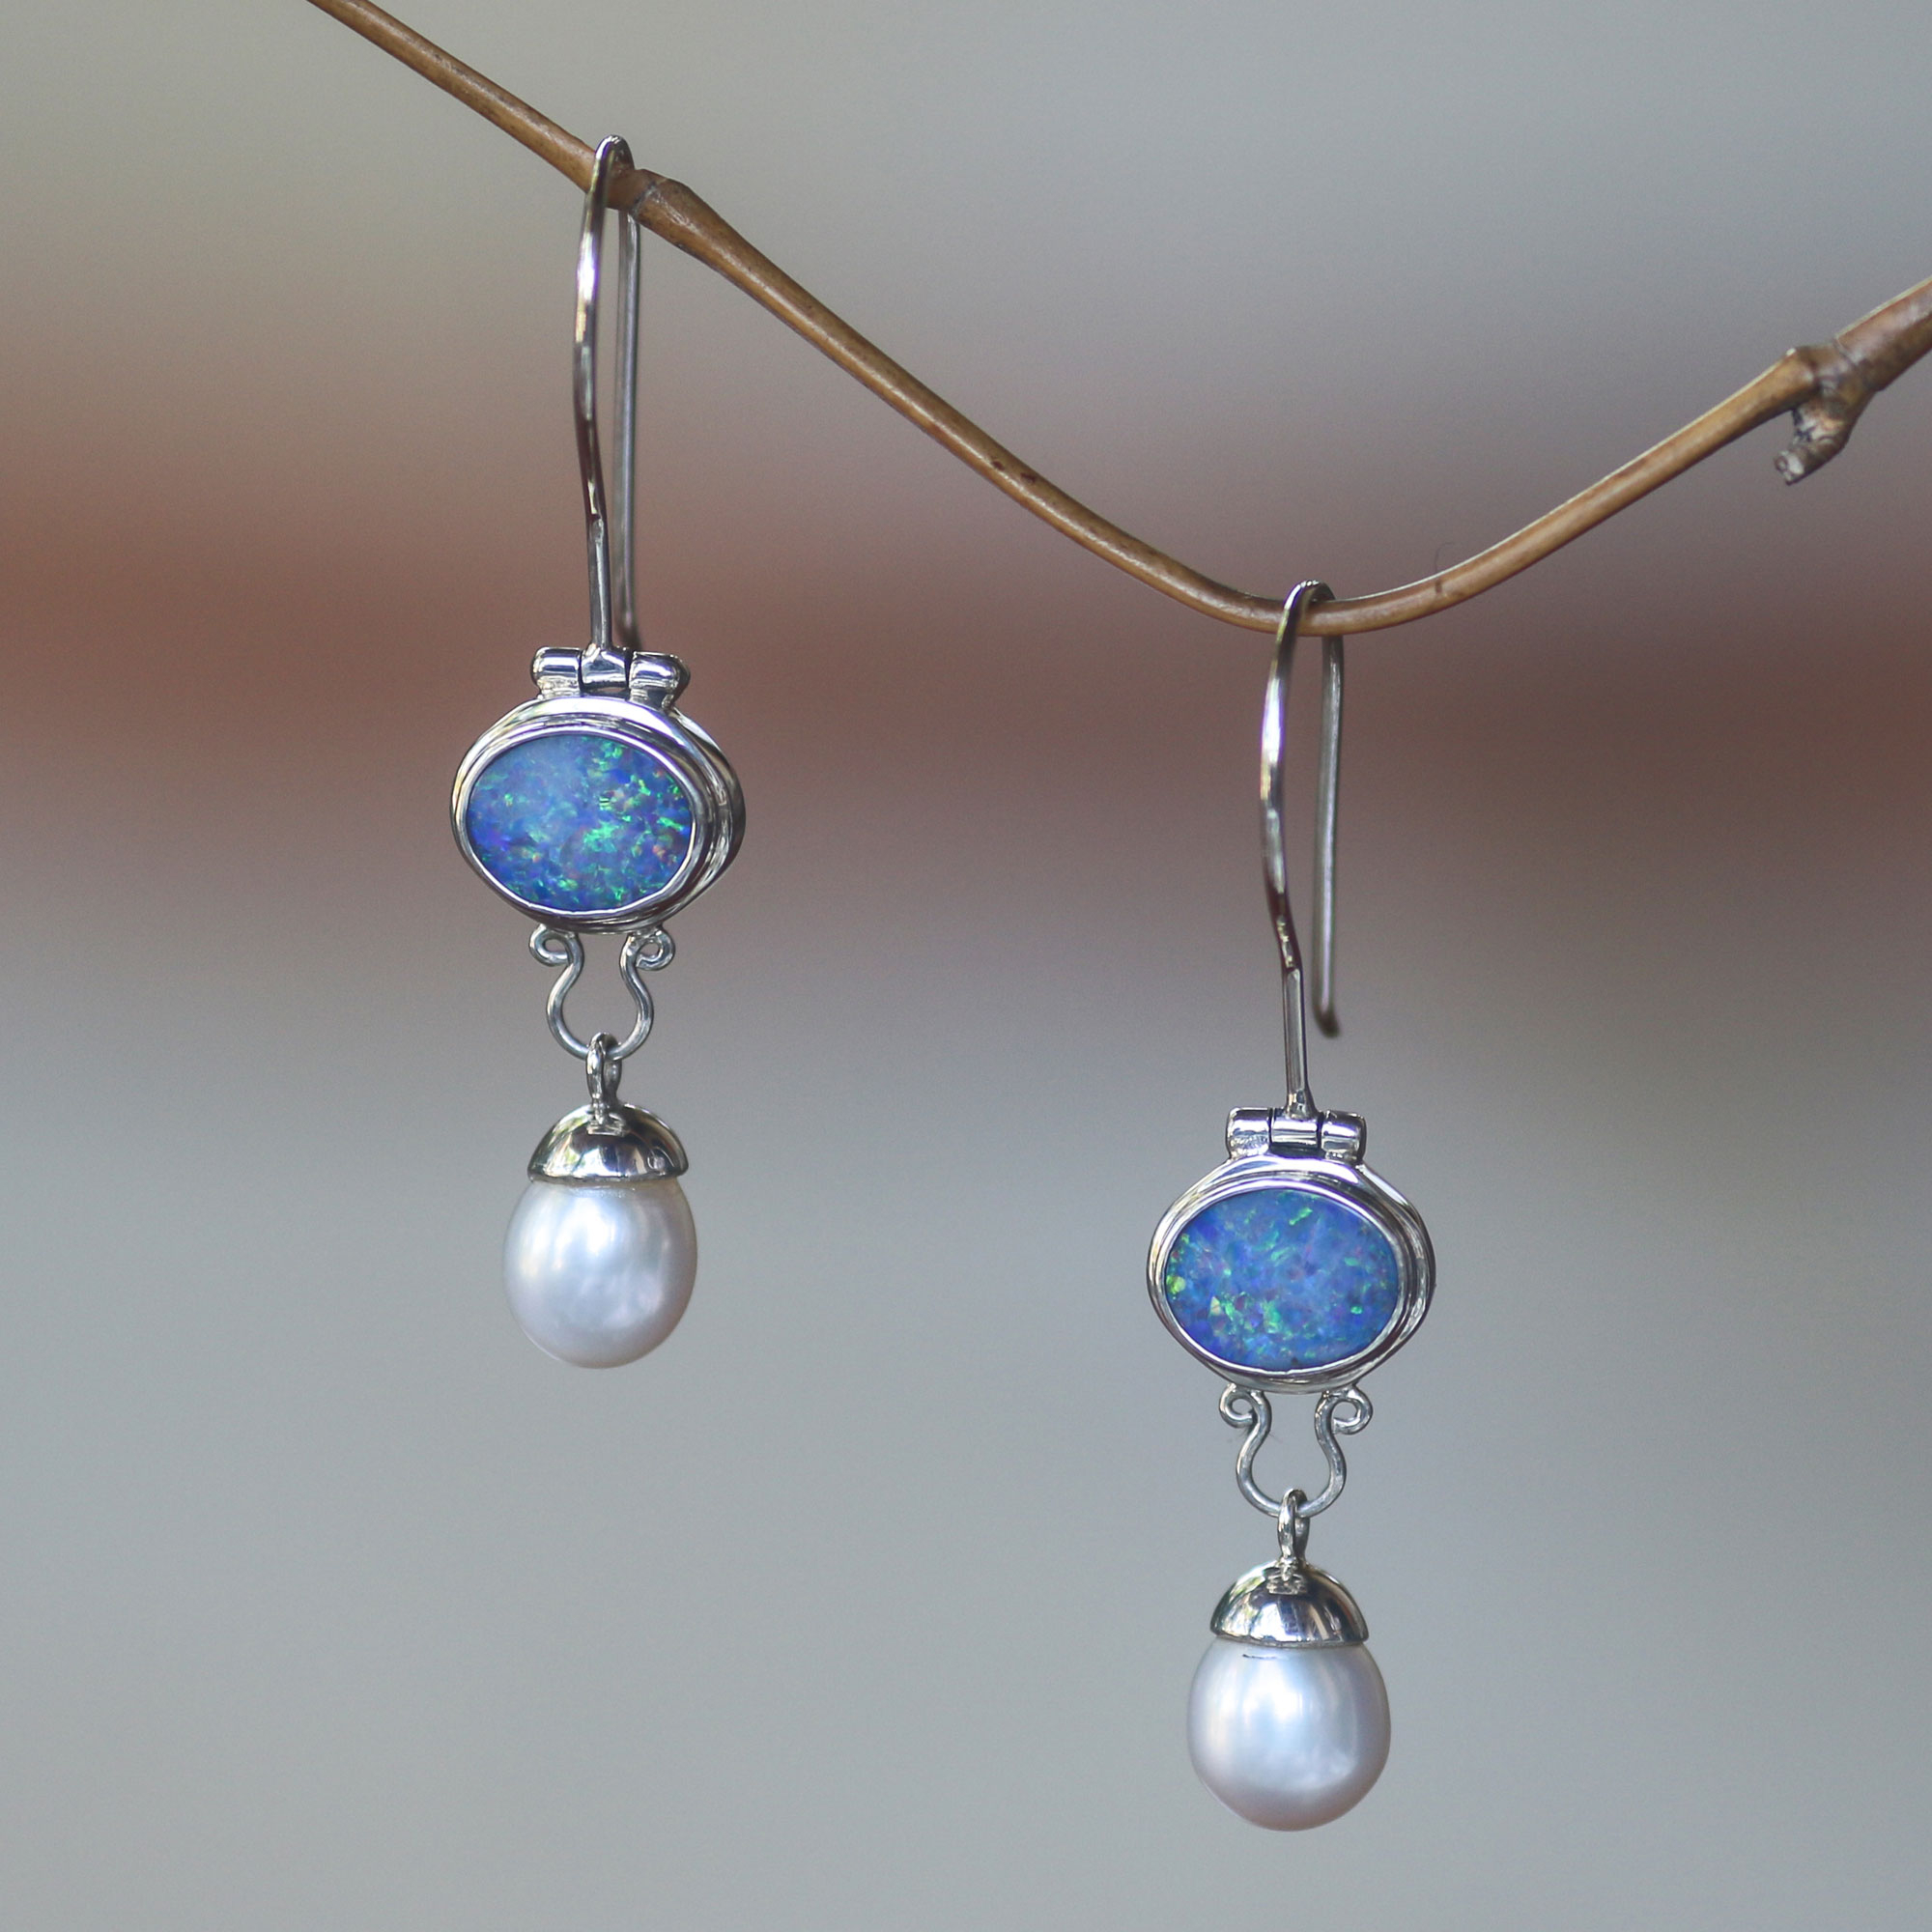 Pearl and Opal Sterling Silver Drop Earrings, 'Harmony' hook dangle earrings handcrafted jewelry